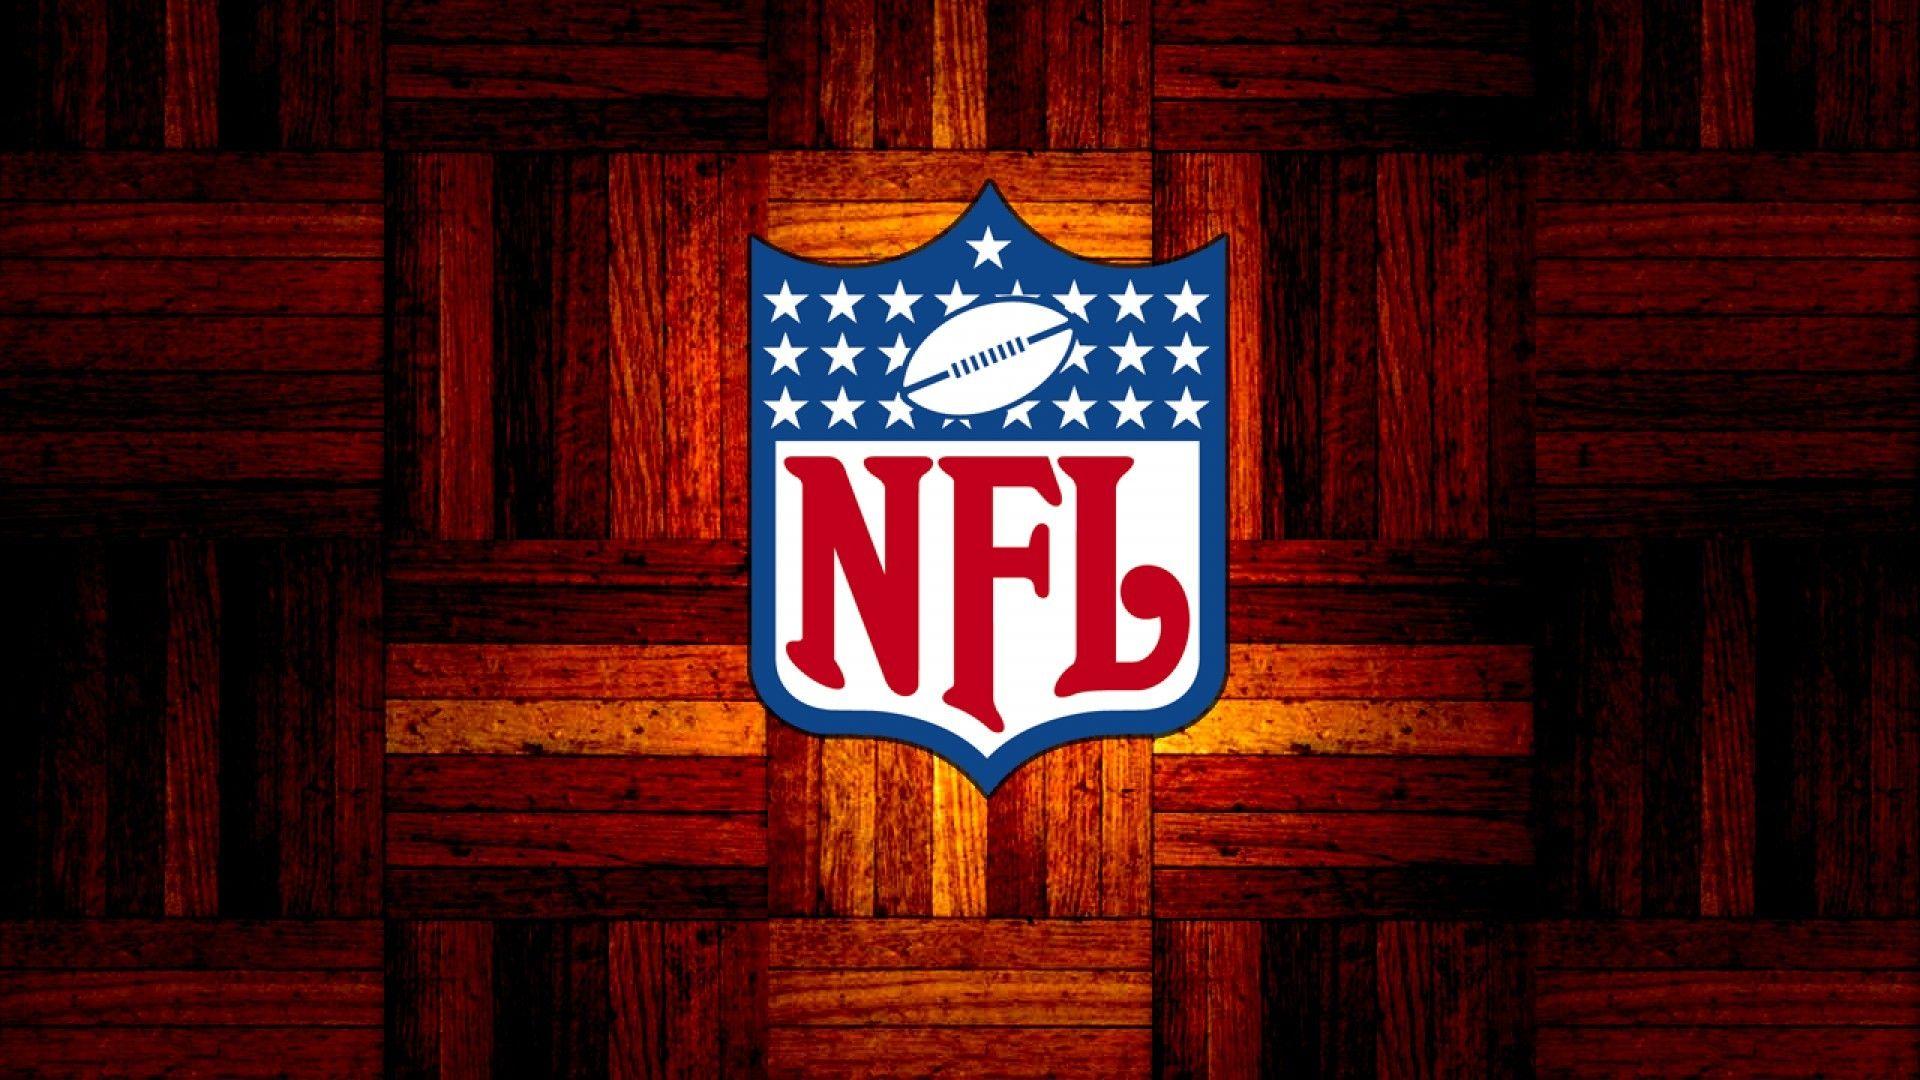 Cool NFL Logo - NFL Logo Wallpaper